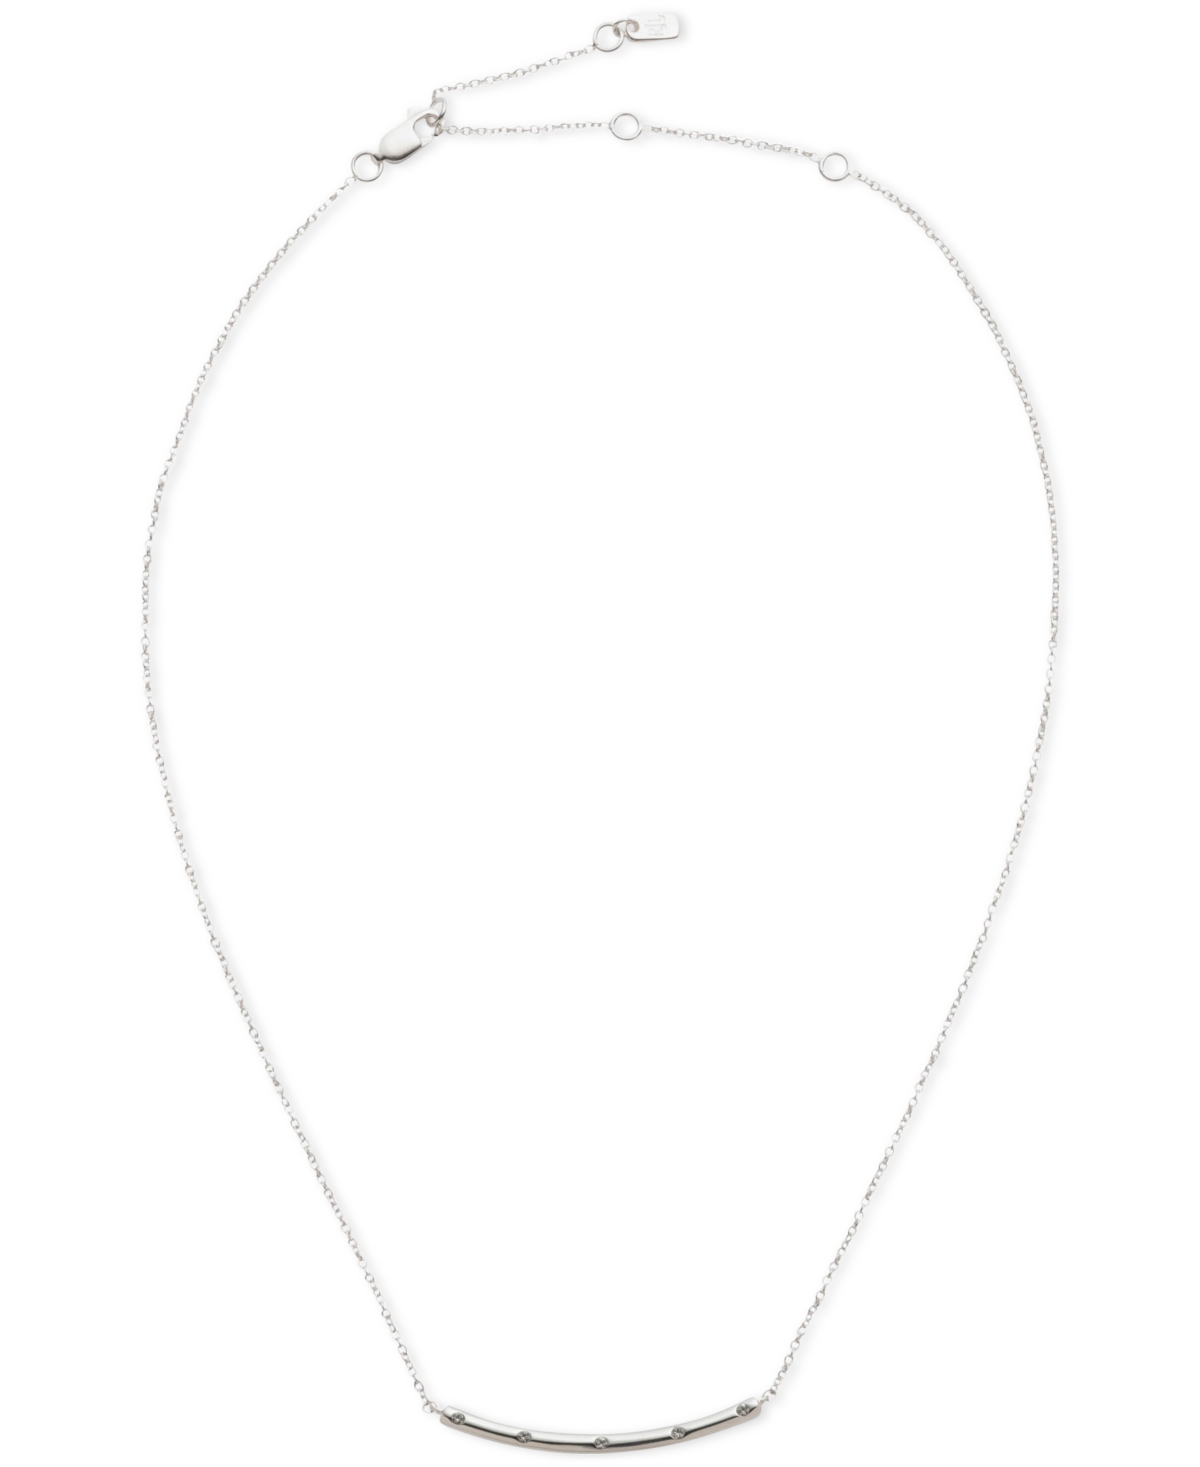 Lauren Ralph Lauren Crystal Studded Curved Bar Collar Necklace in Sterling Silver, 15" + 3" extender - Sterling Silver